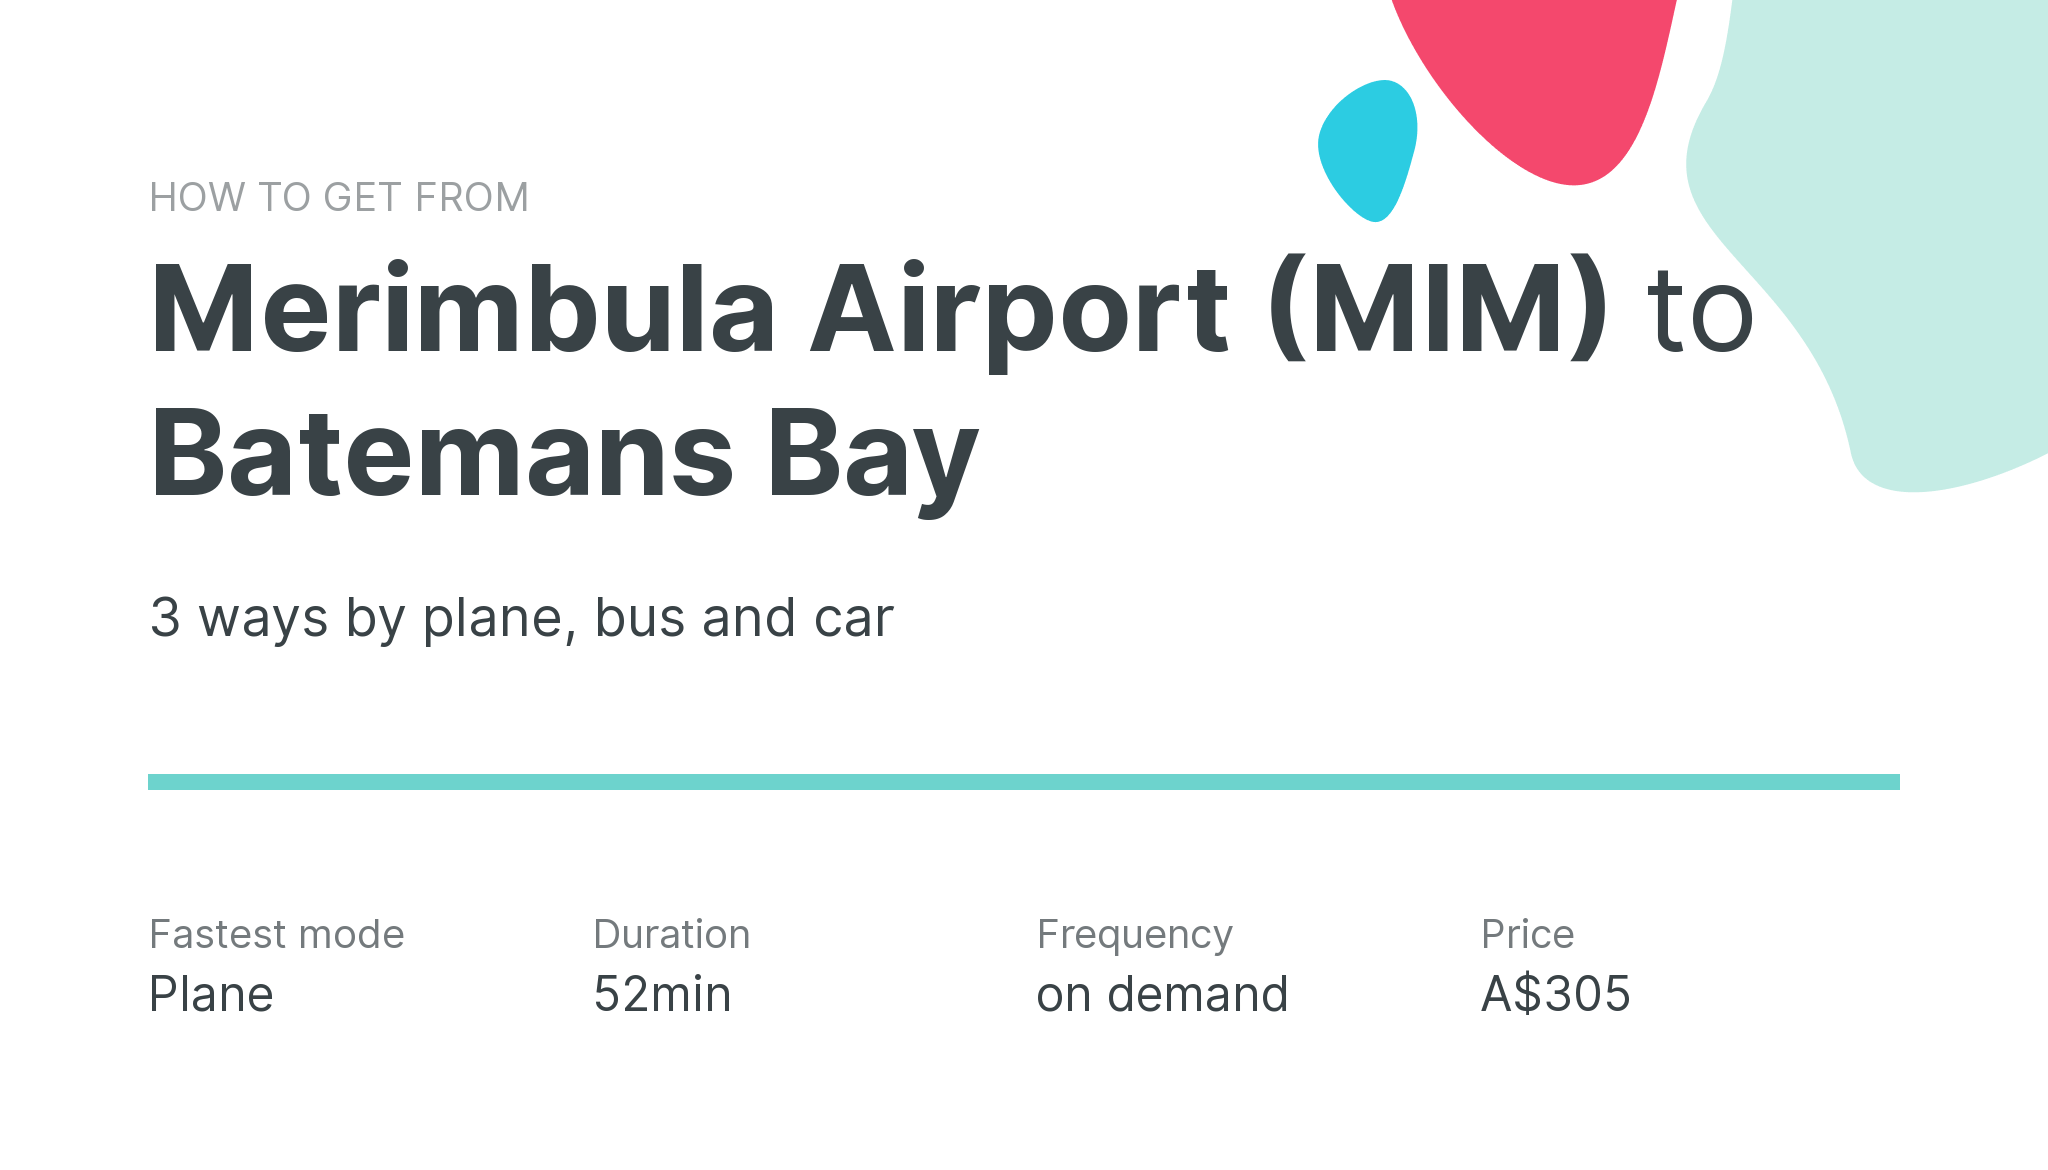 How do I get from Merimbula Airport (MIM) to Batemans Bay